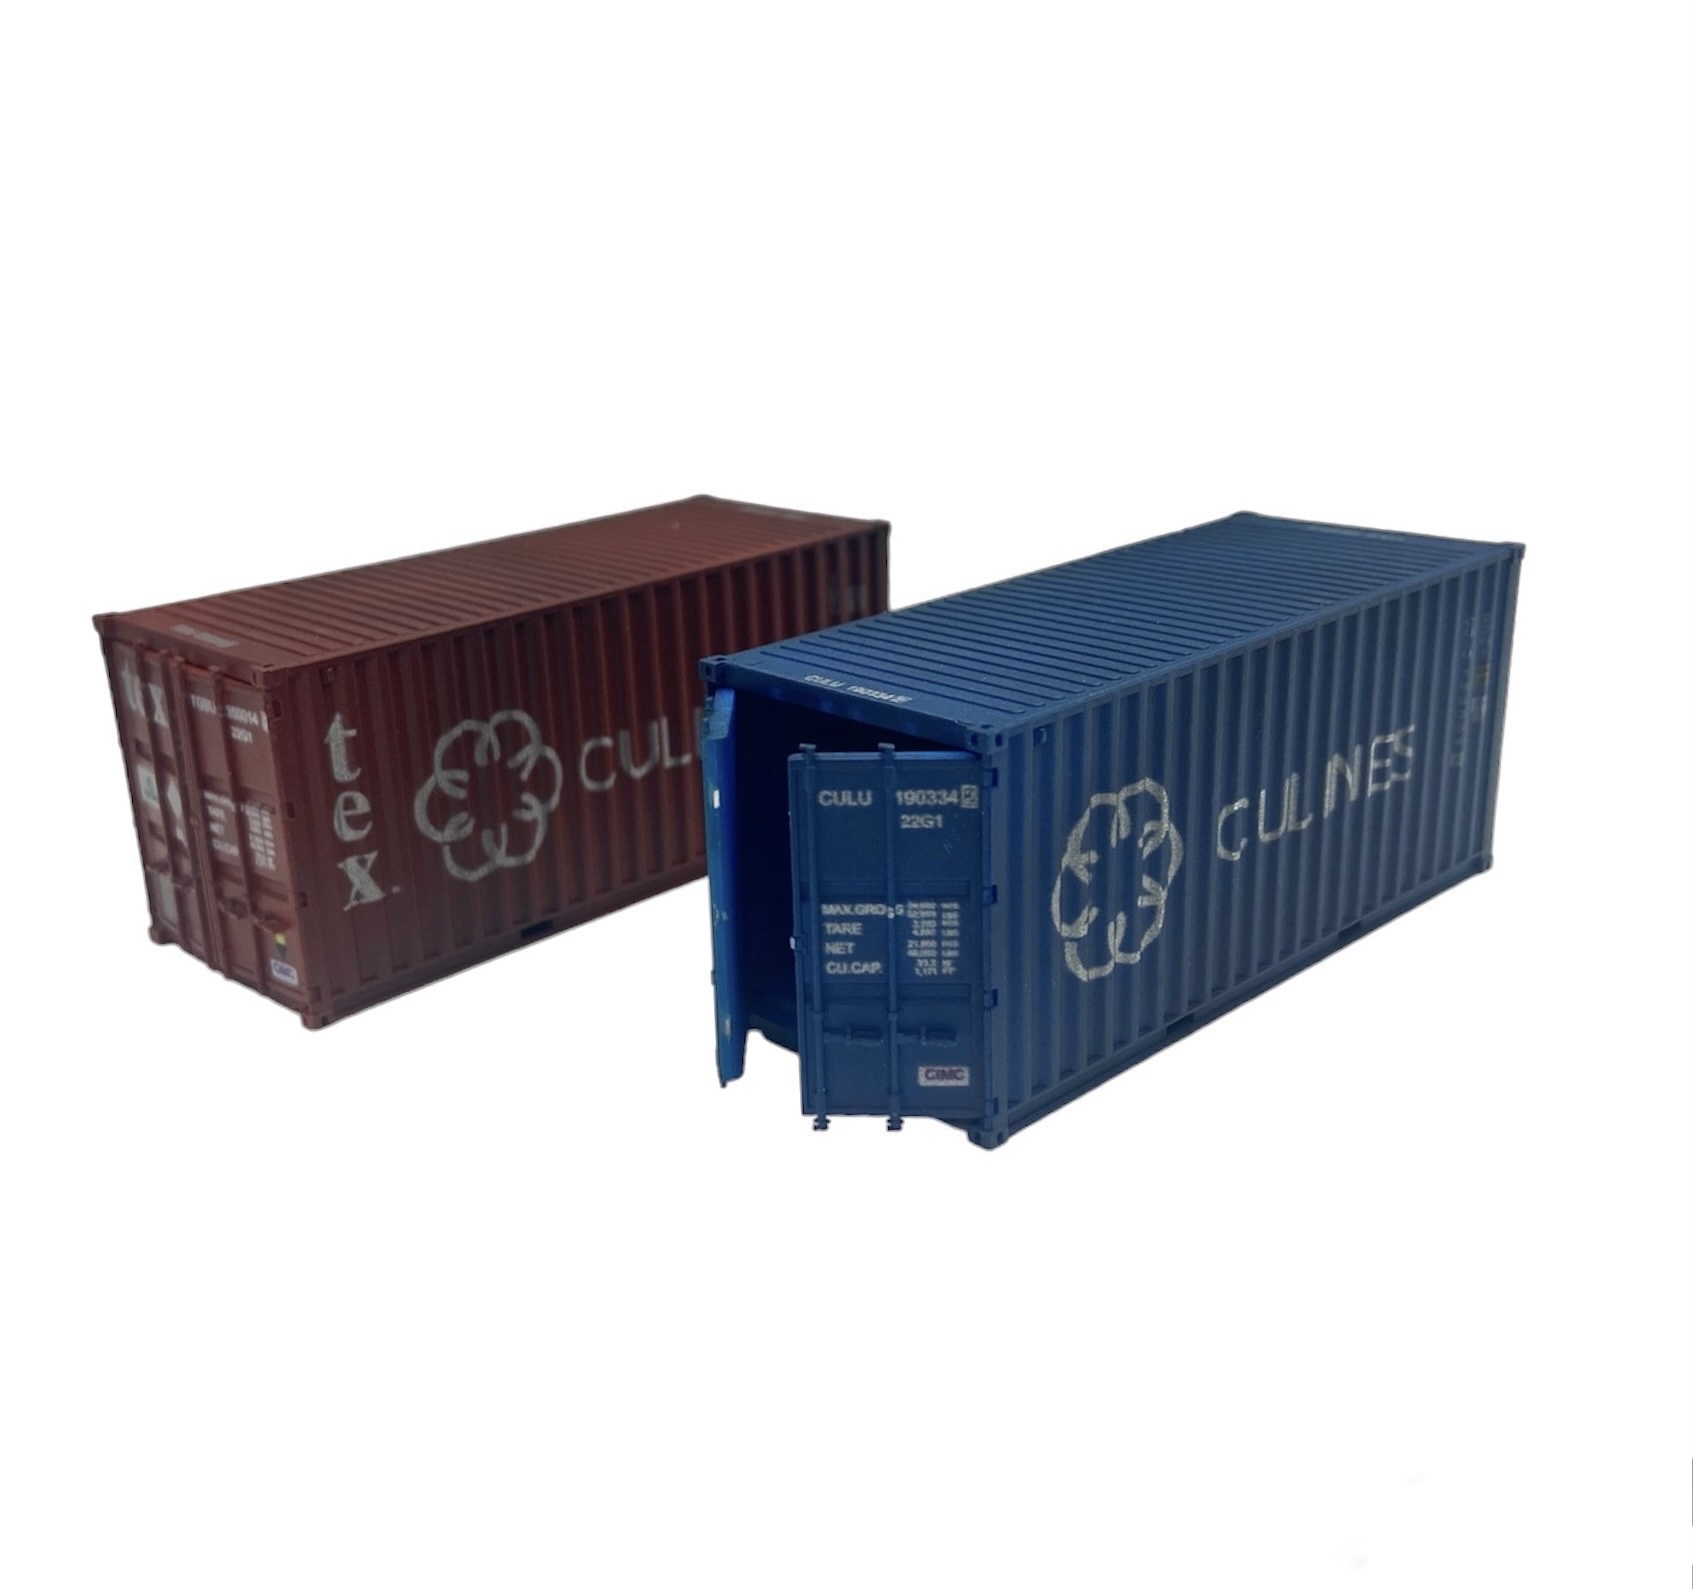 4F-028-173 20ft' Container Culines 190334 2/TGBU 350365 8 Wth Twin Pac